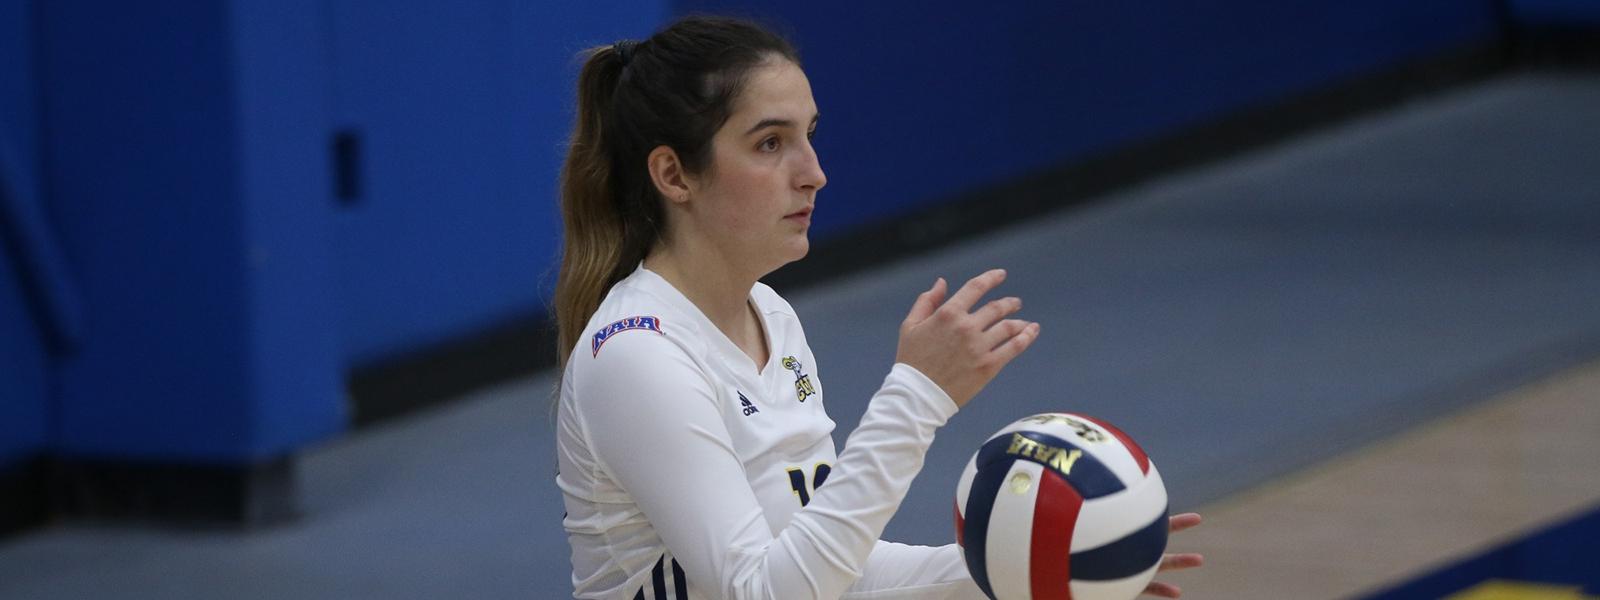 Emilia Niedzielska is also a defensive specialist on the CIU Rams volleyball team. 